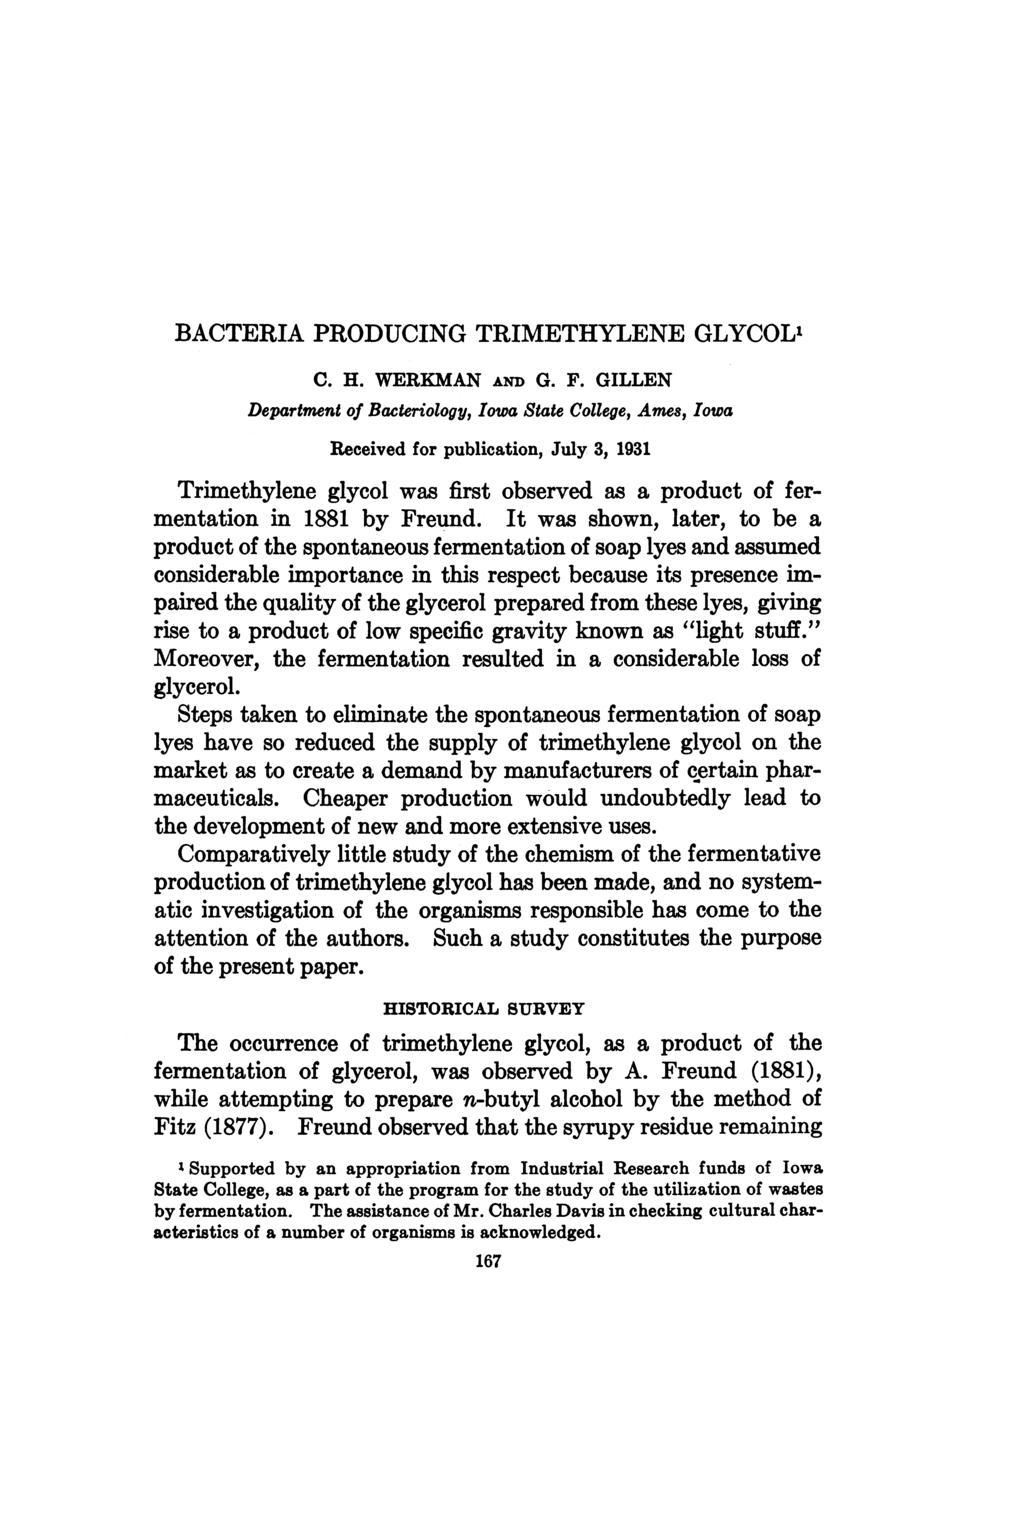 BACTERIA PRODUCING TRIMETHYLENE GLYCOL' C. H. WERKMAN AND G. F.